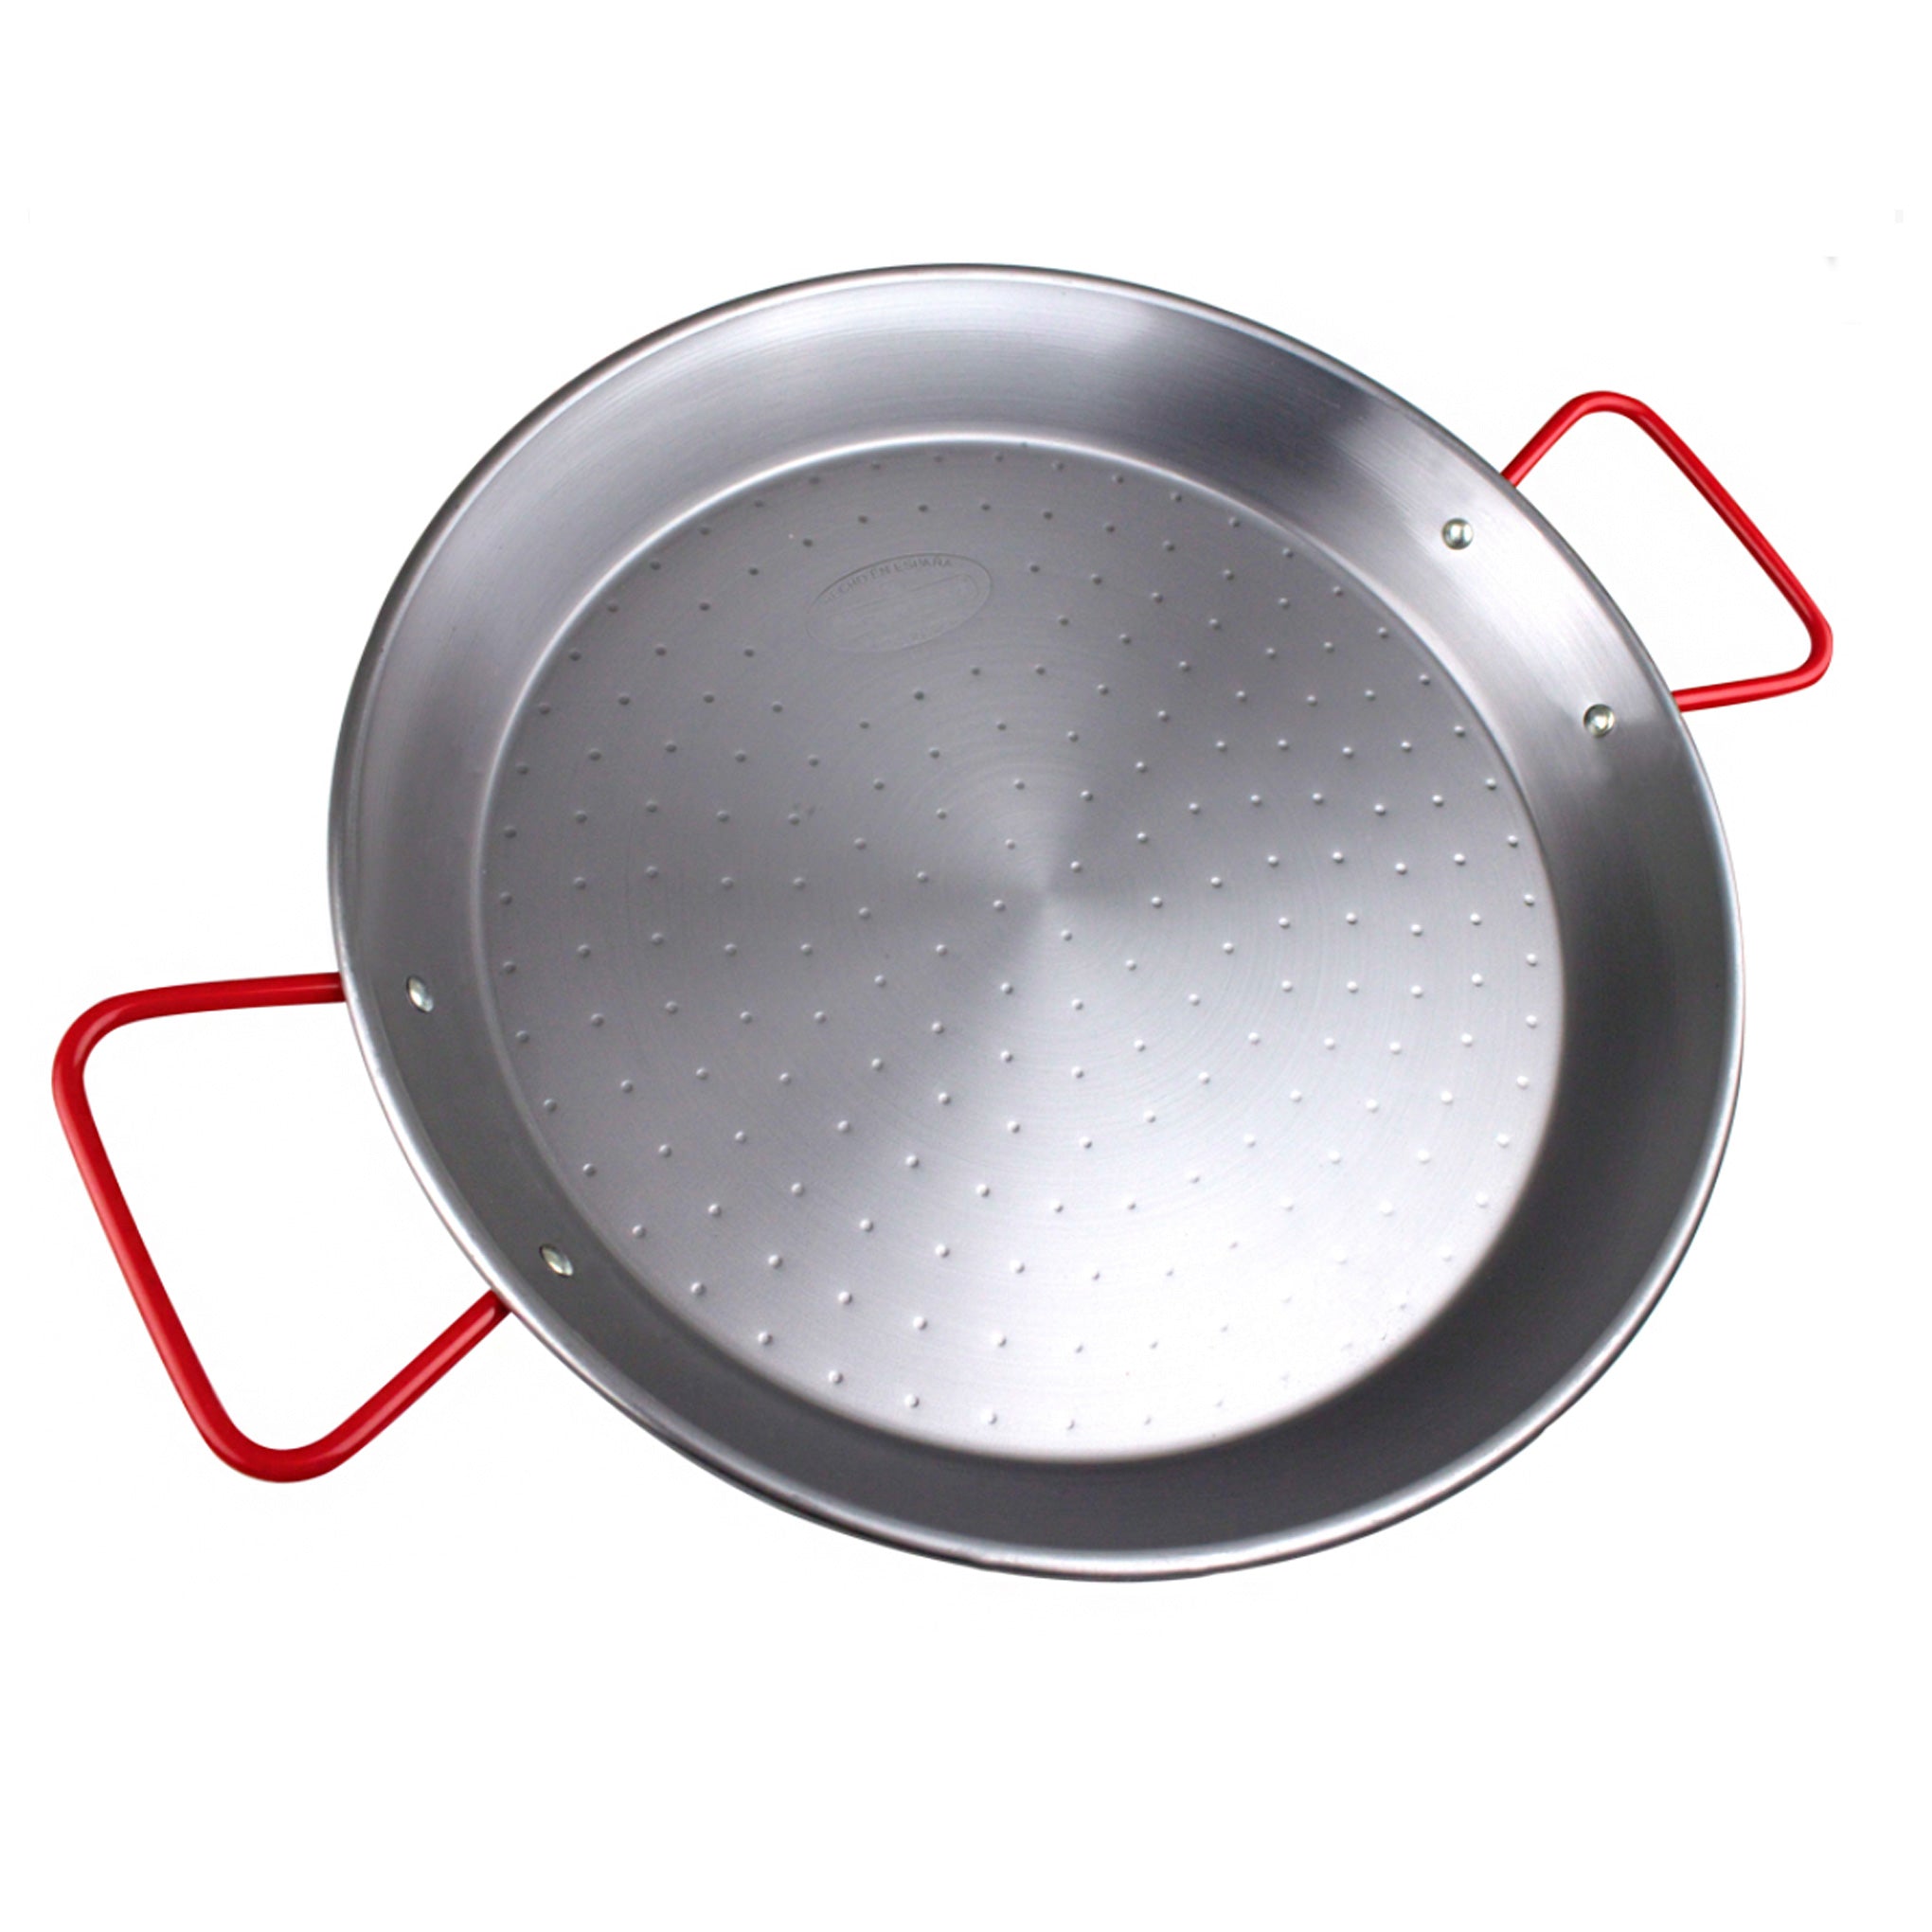 15 Stainless Steel Paella Pan (38 cm)